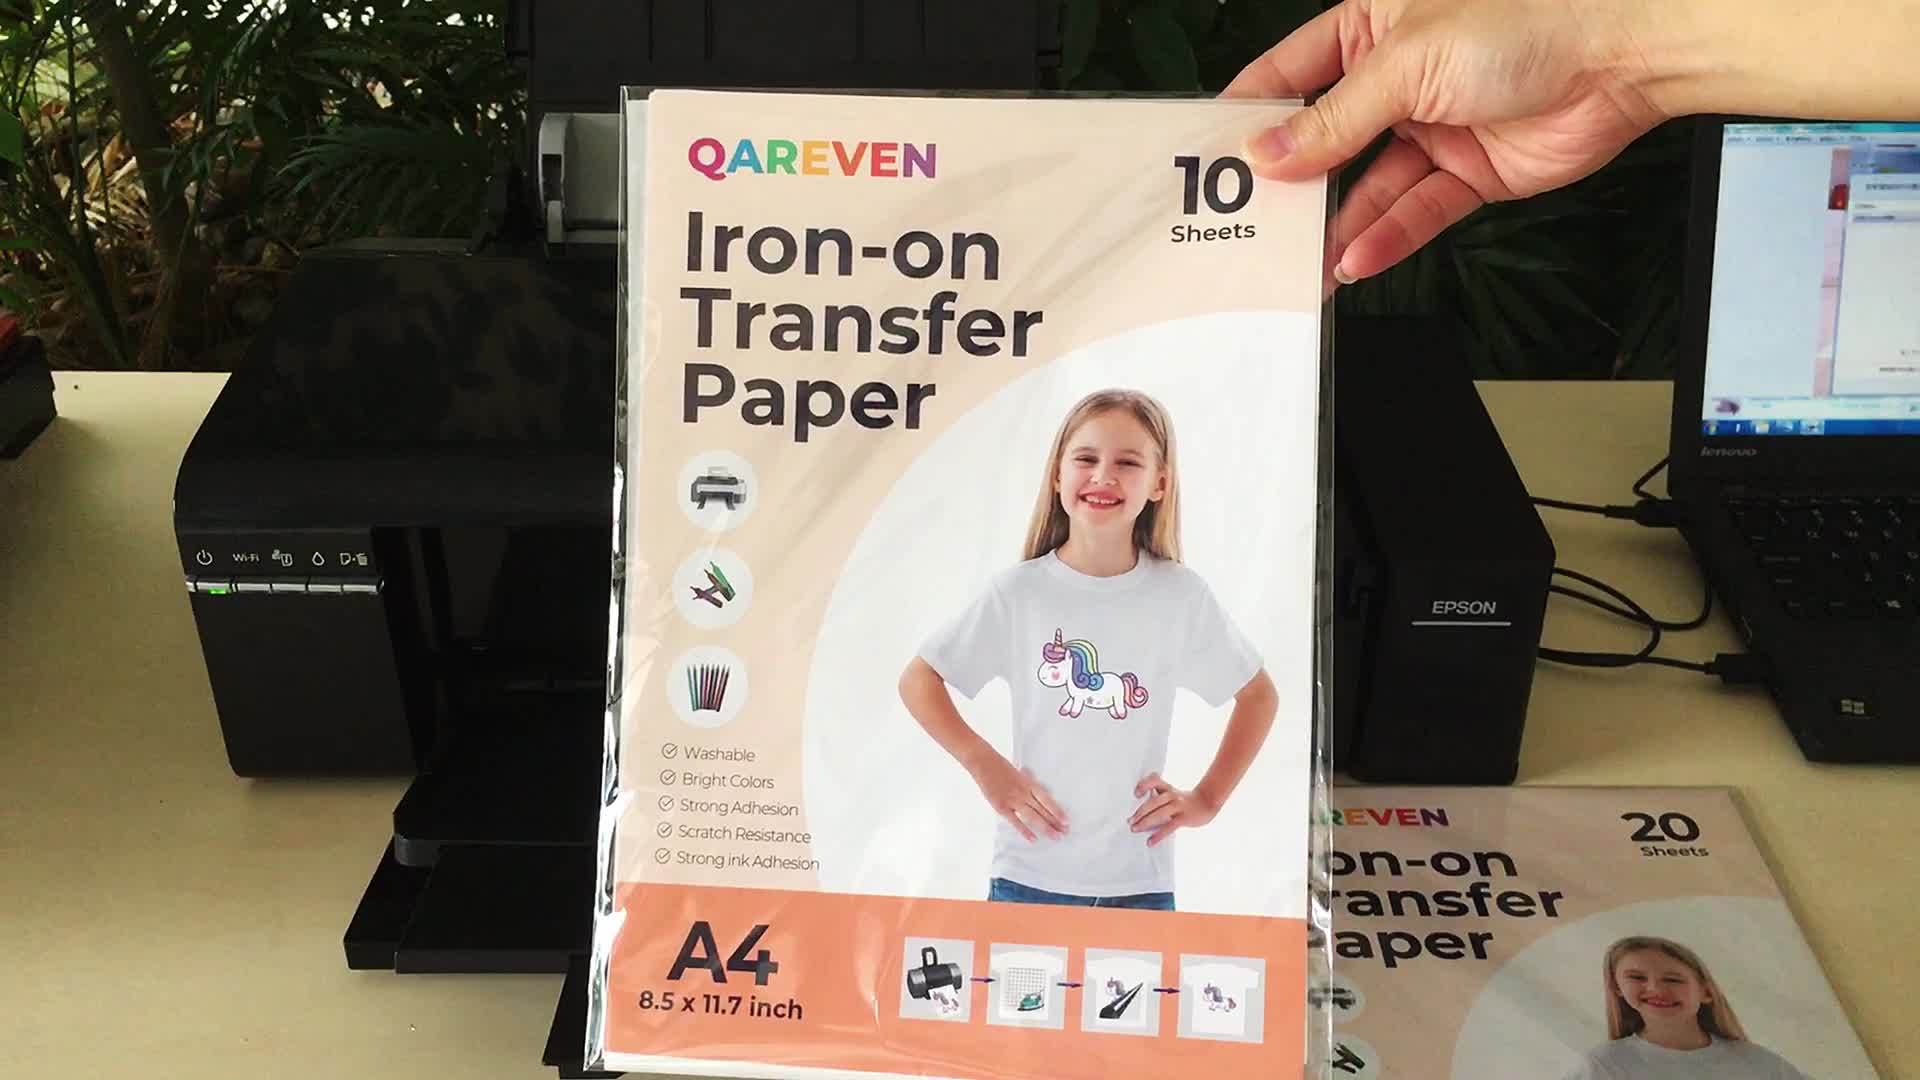 Epson Iron-On Cool Peel Transfer - 10 sheets